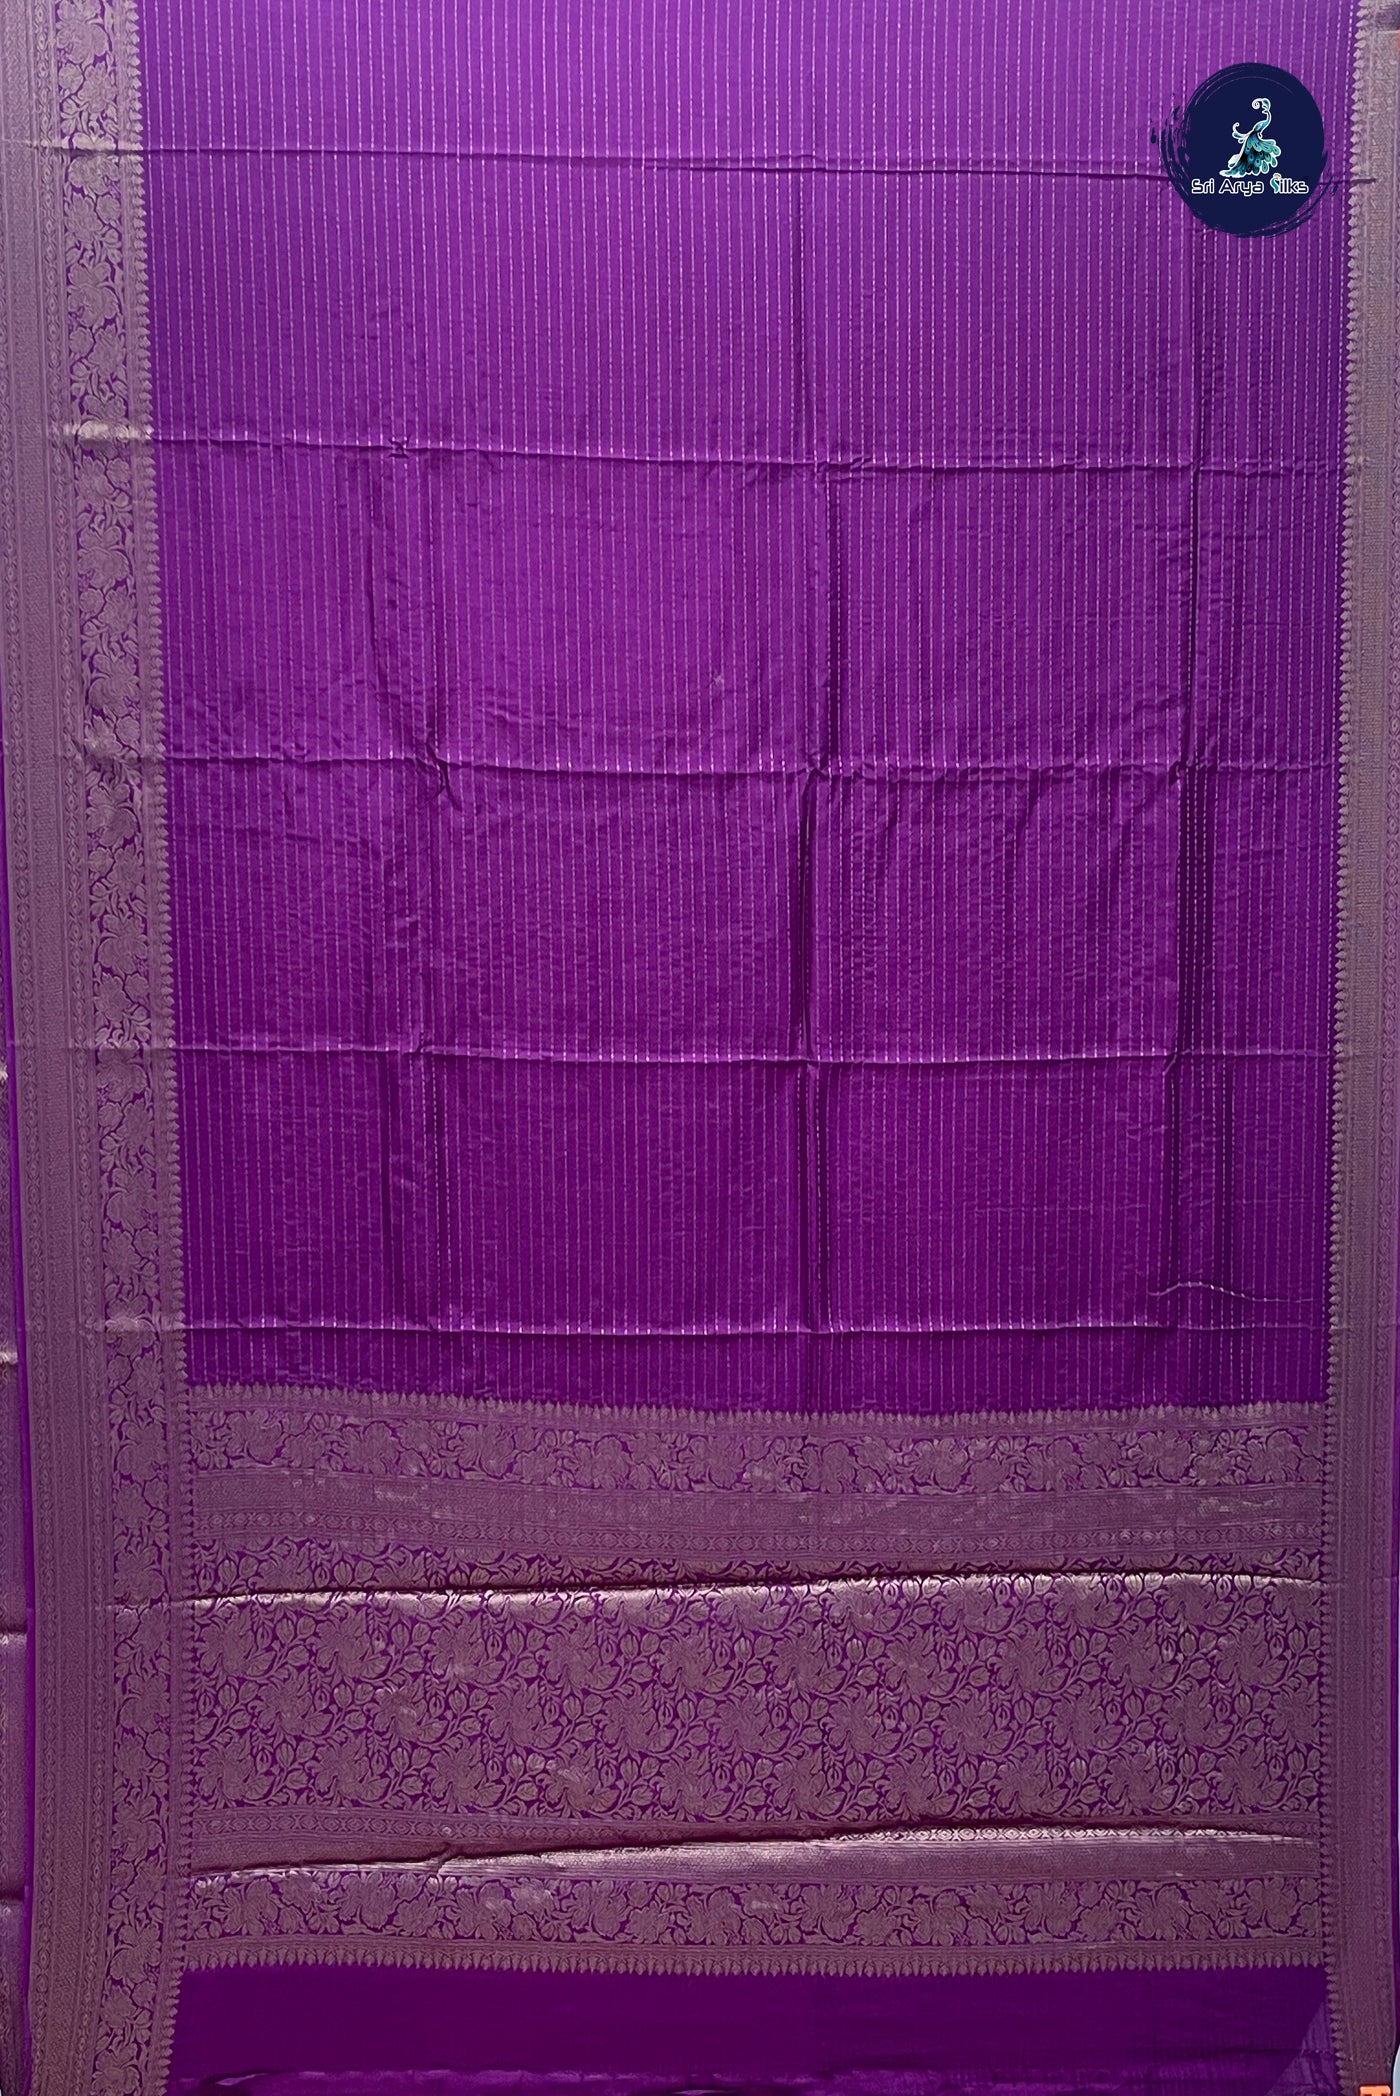 Purple Banarasi Saree With Stripes Pattern